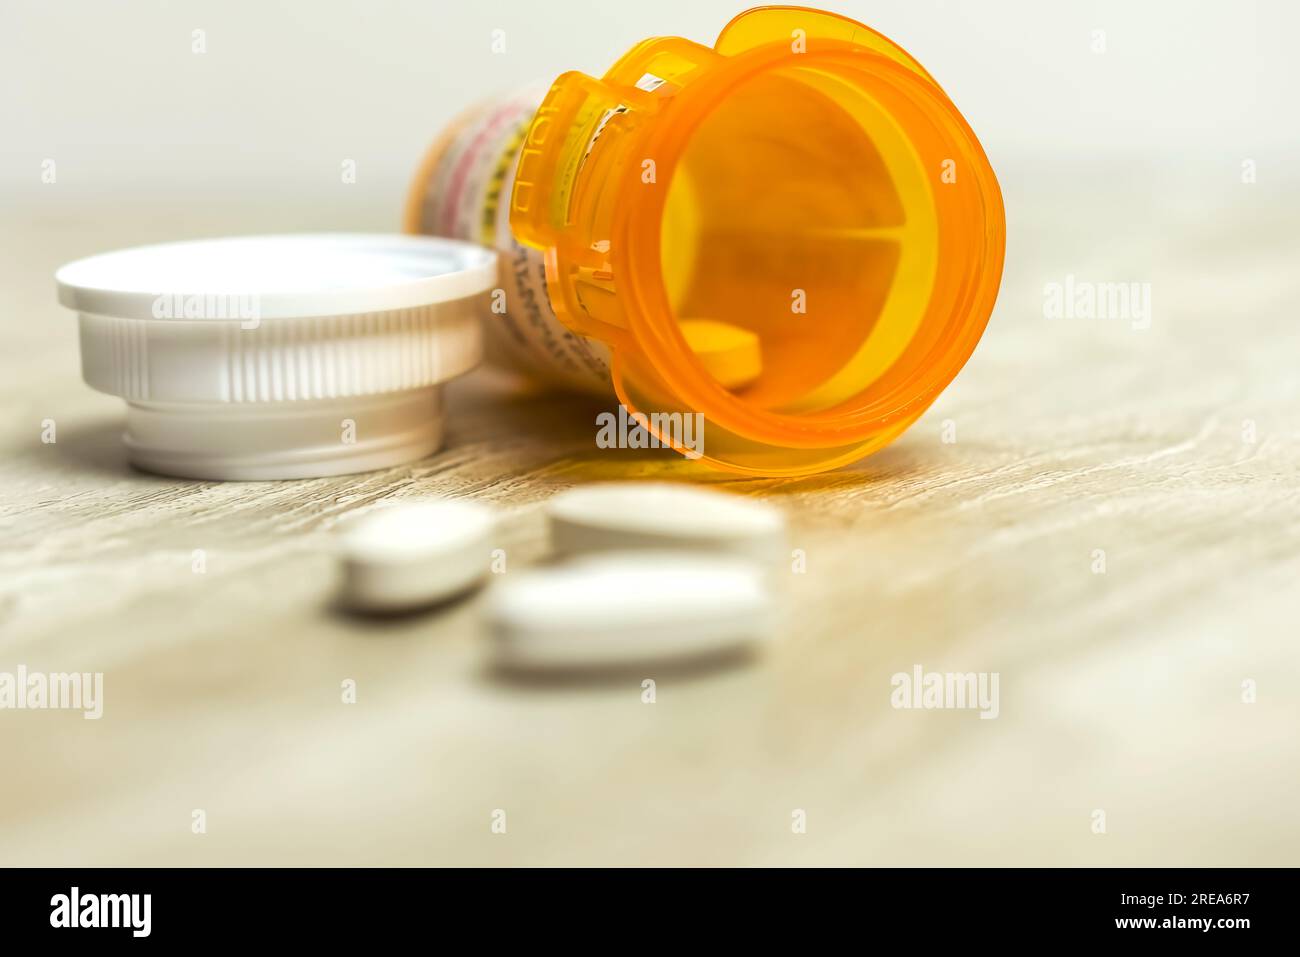 Amoxicillin/Clavulanic Acid 500 mg tablets with orange prescription bottle Stock Photo